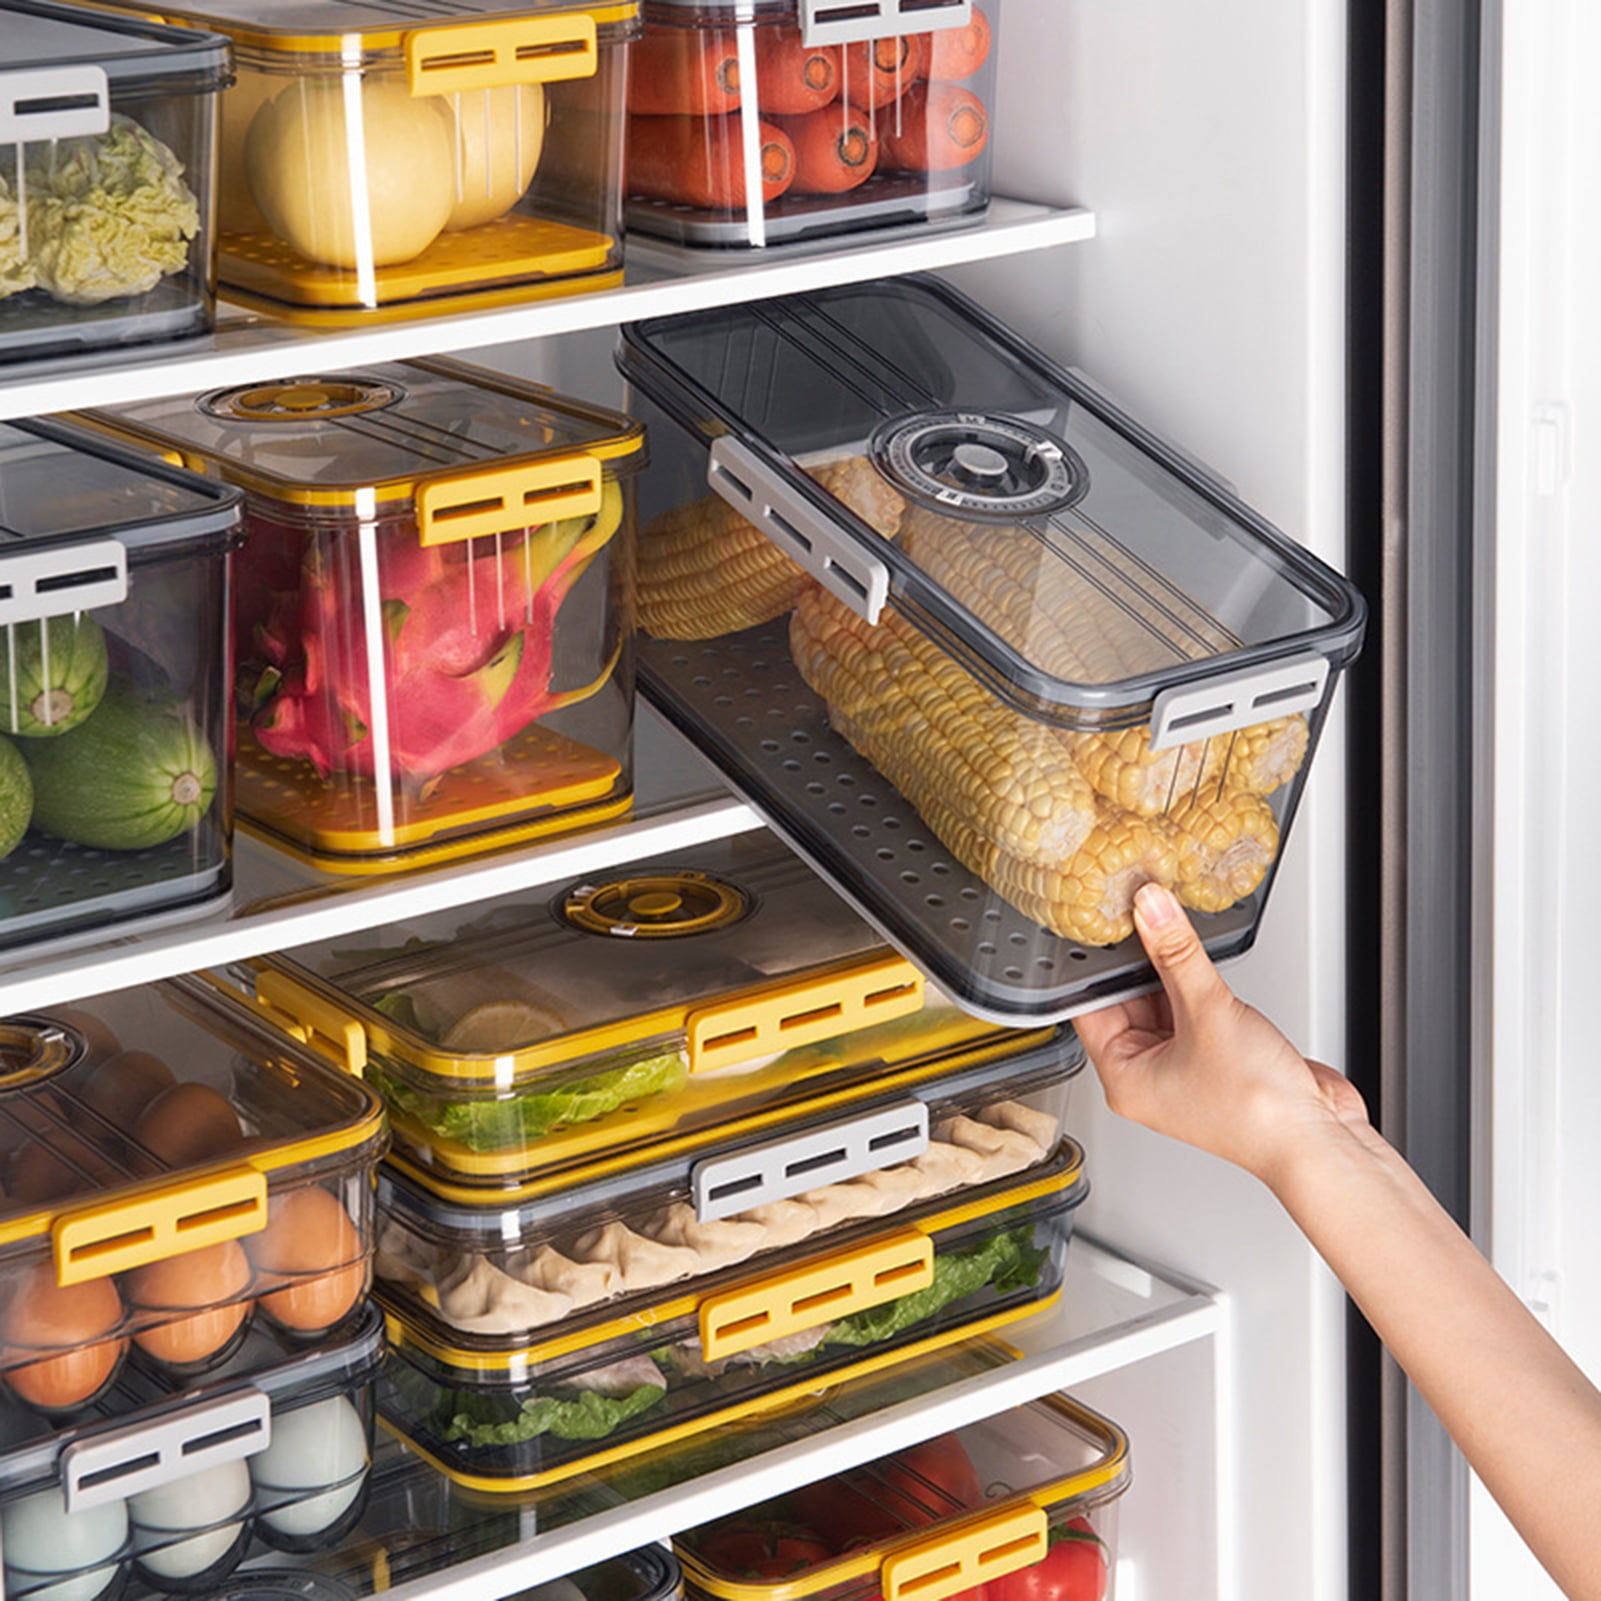 HOOJO Refrigerator Organizer Bins - 8pcs Clear Plastic Bins For Fridge,  Freezer, Kitchen Cabinet, Pantry Organization, BPA Free Fridge Organizer